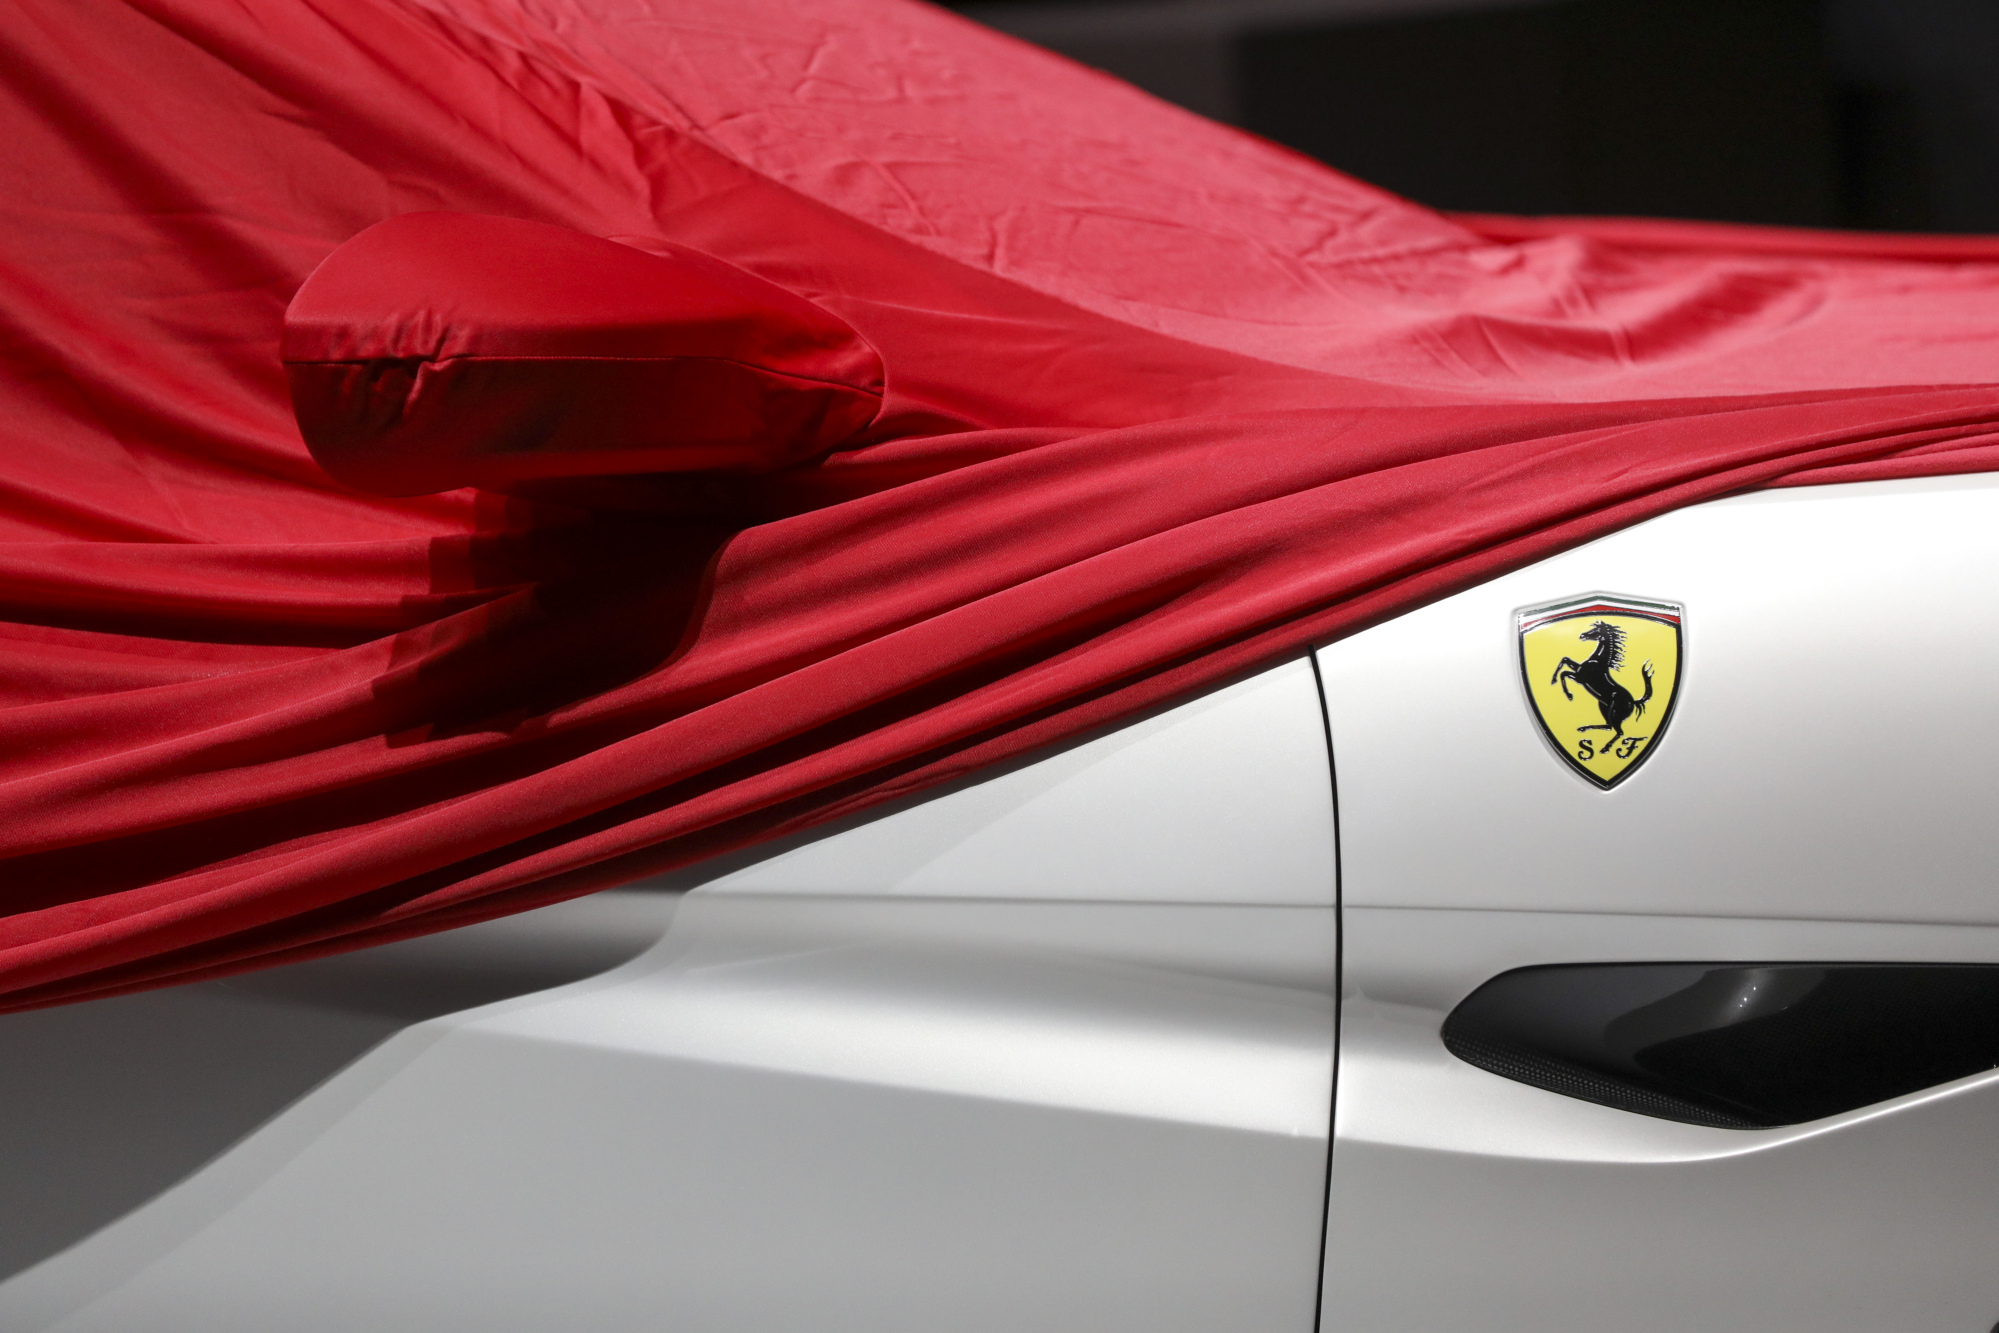 Ferrari&nbsp;will expand its Maranello plant to make electric cars.